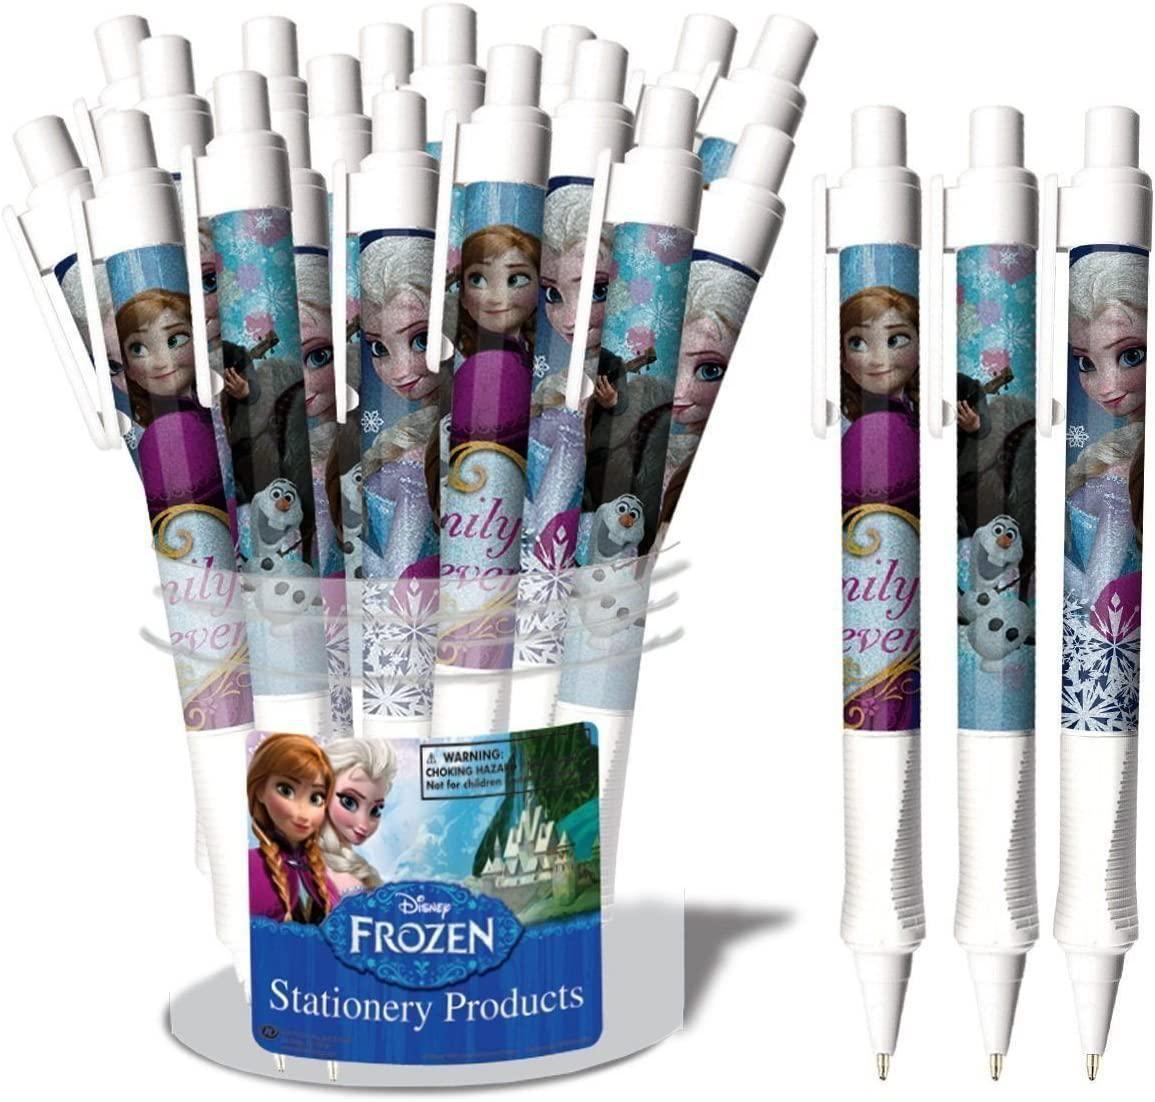 Frozen Disney Grip Pen White Featuring Elsa, Olaf and Anna-1 Pen